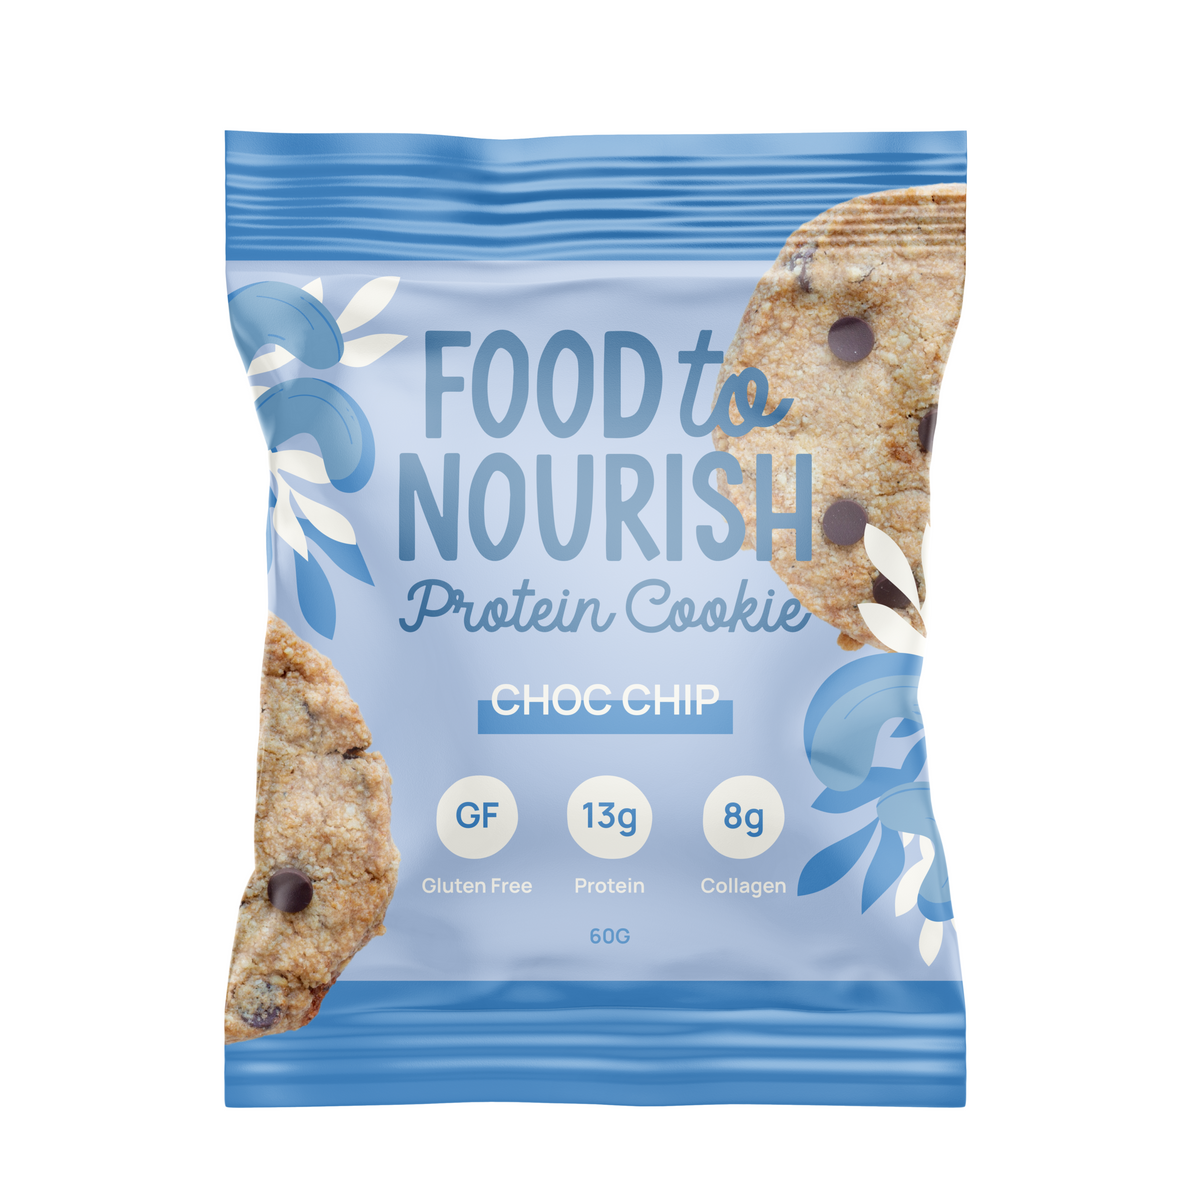 Food to Nourish Protein Cookie Choc Chip